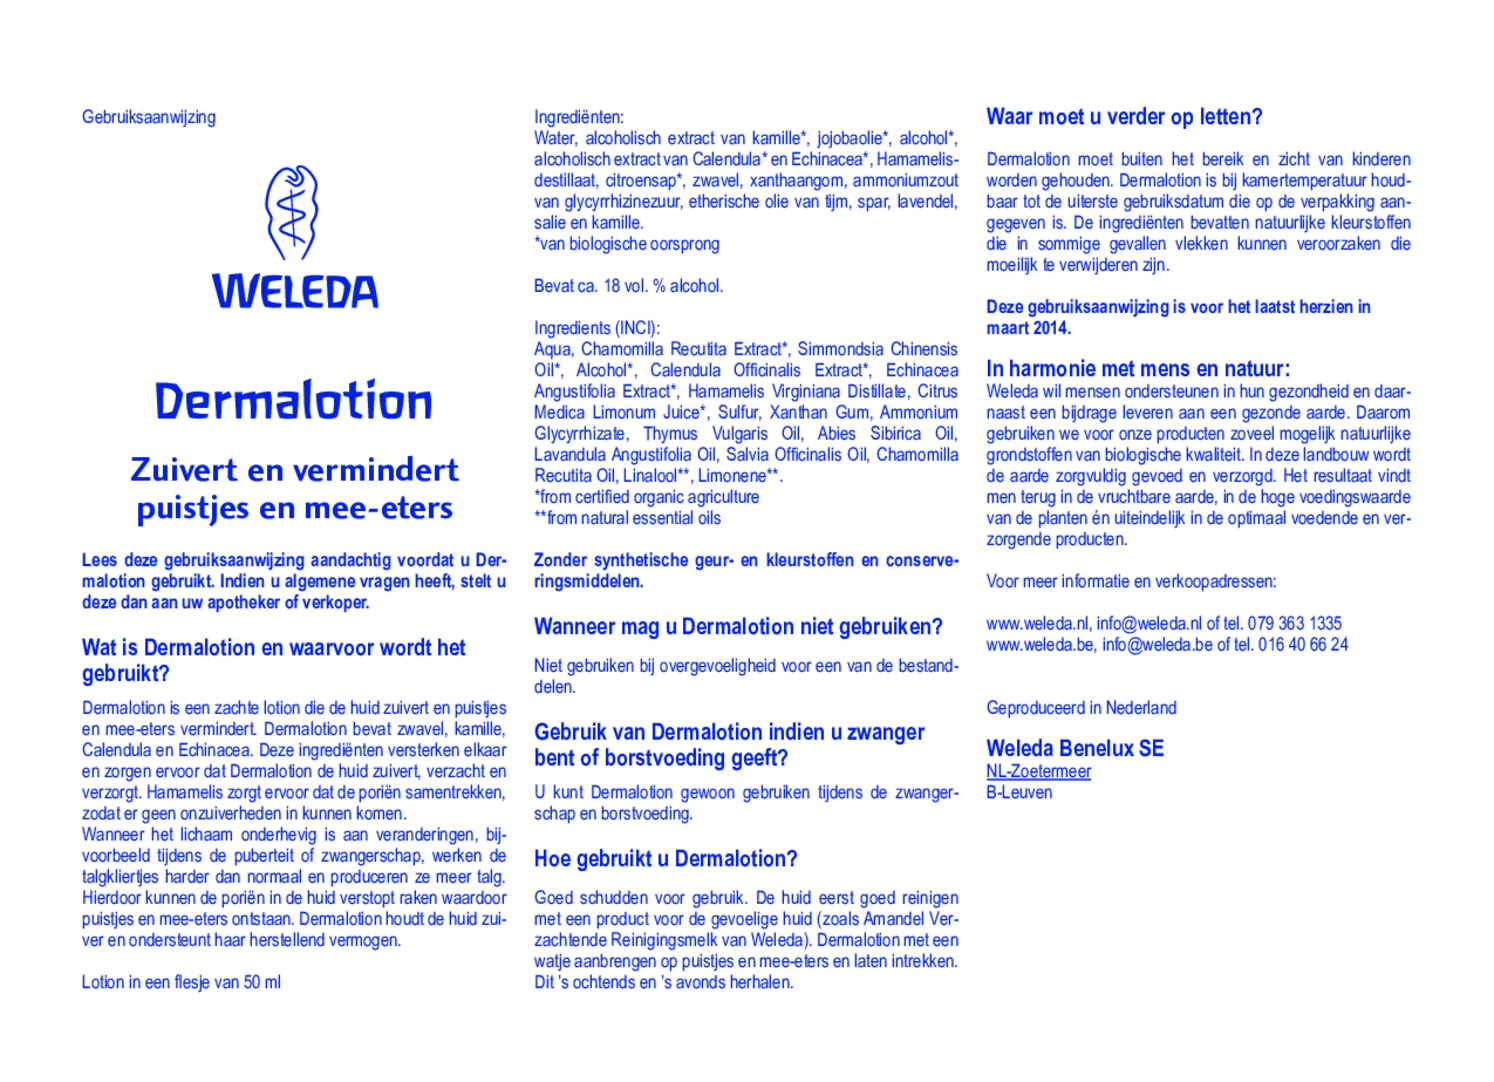 Dermalotion afbeelding van document #1, gebruiksaanwijzing